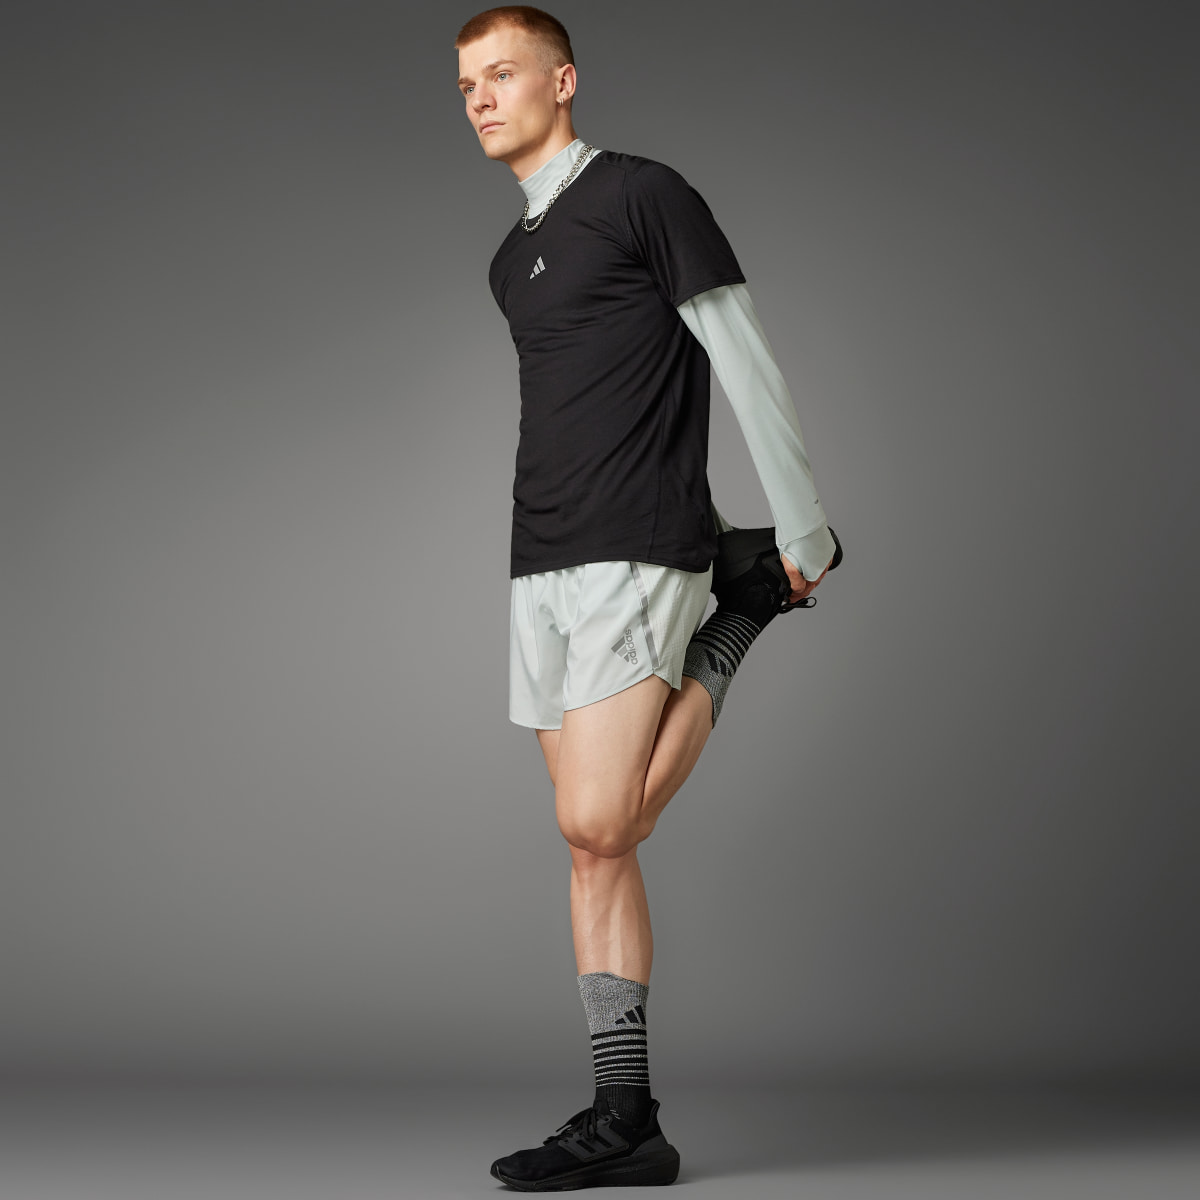 Adidas Designed 4 Running Shorts. 6